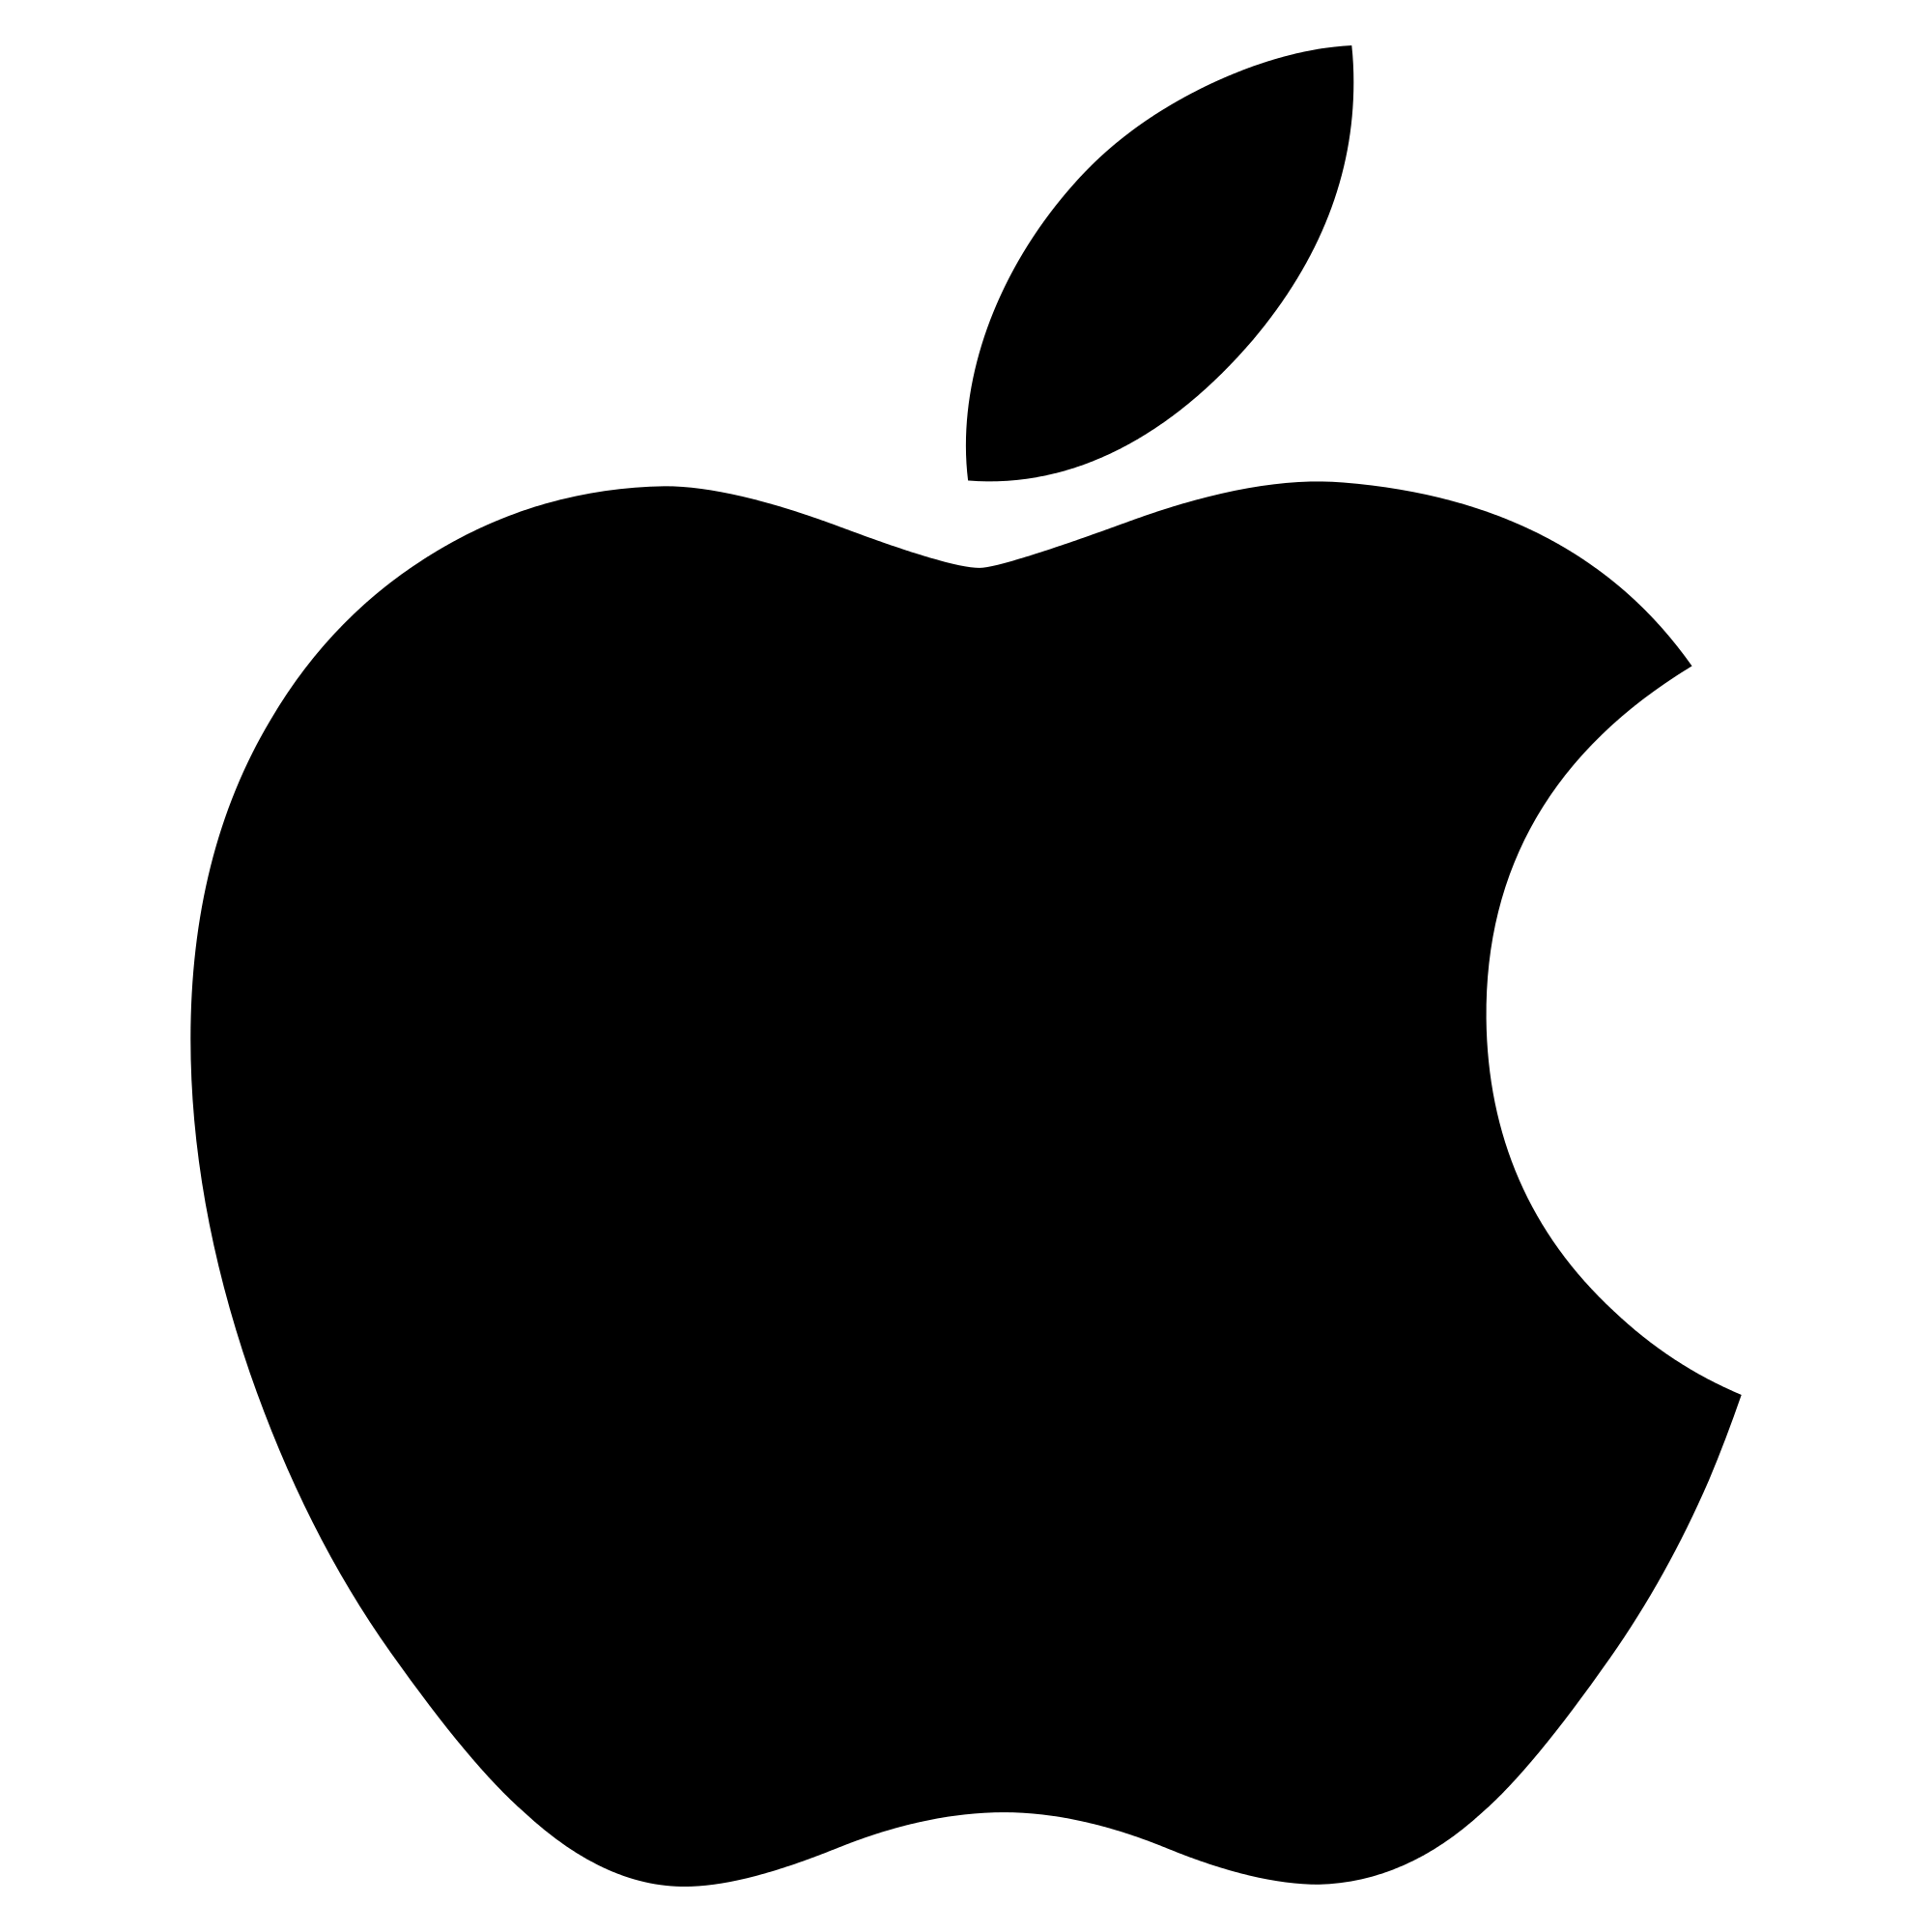 New 2016 Small Apple Logo - Index of /wordpress/wp-content/uploads/backup/2016/09